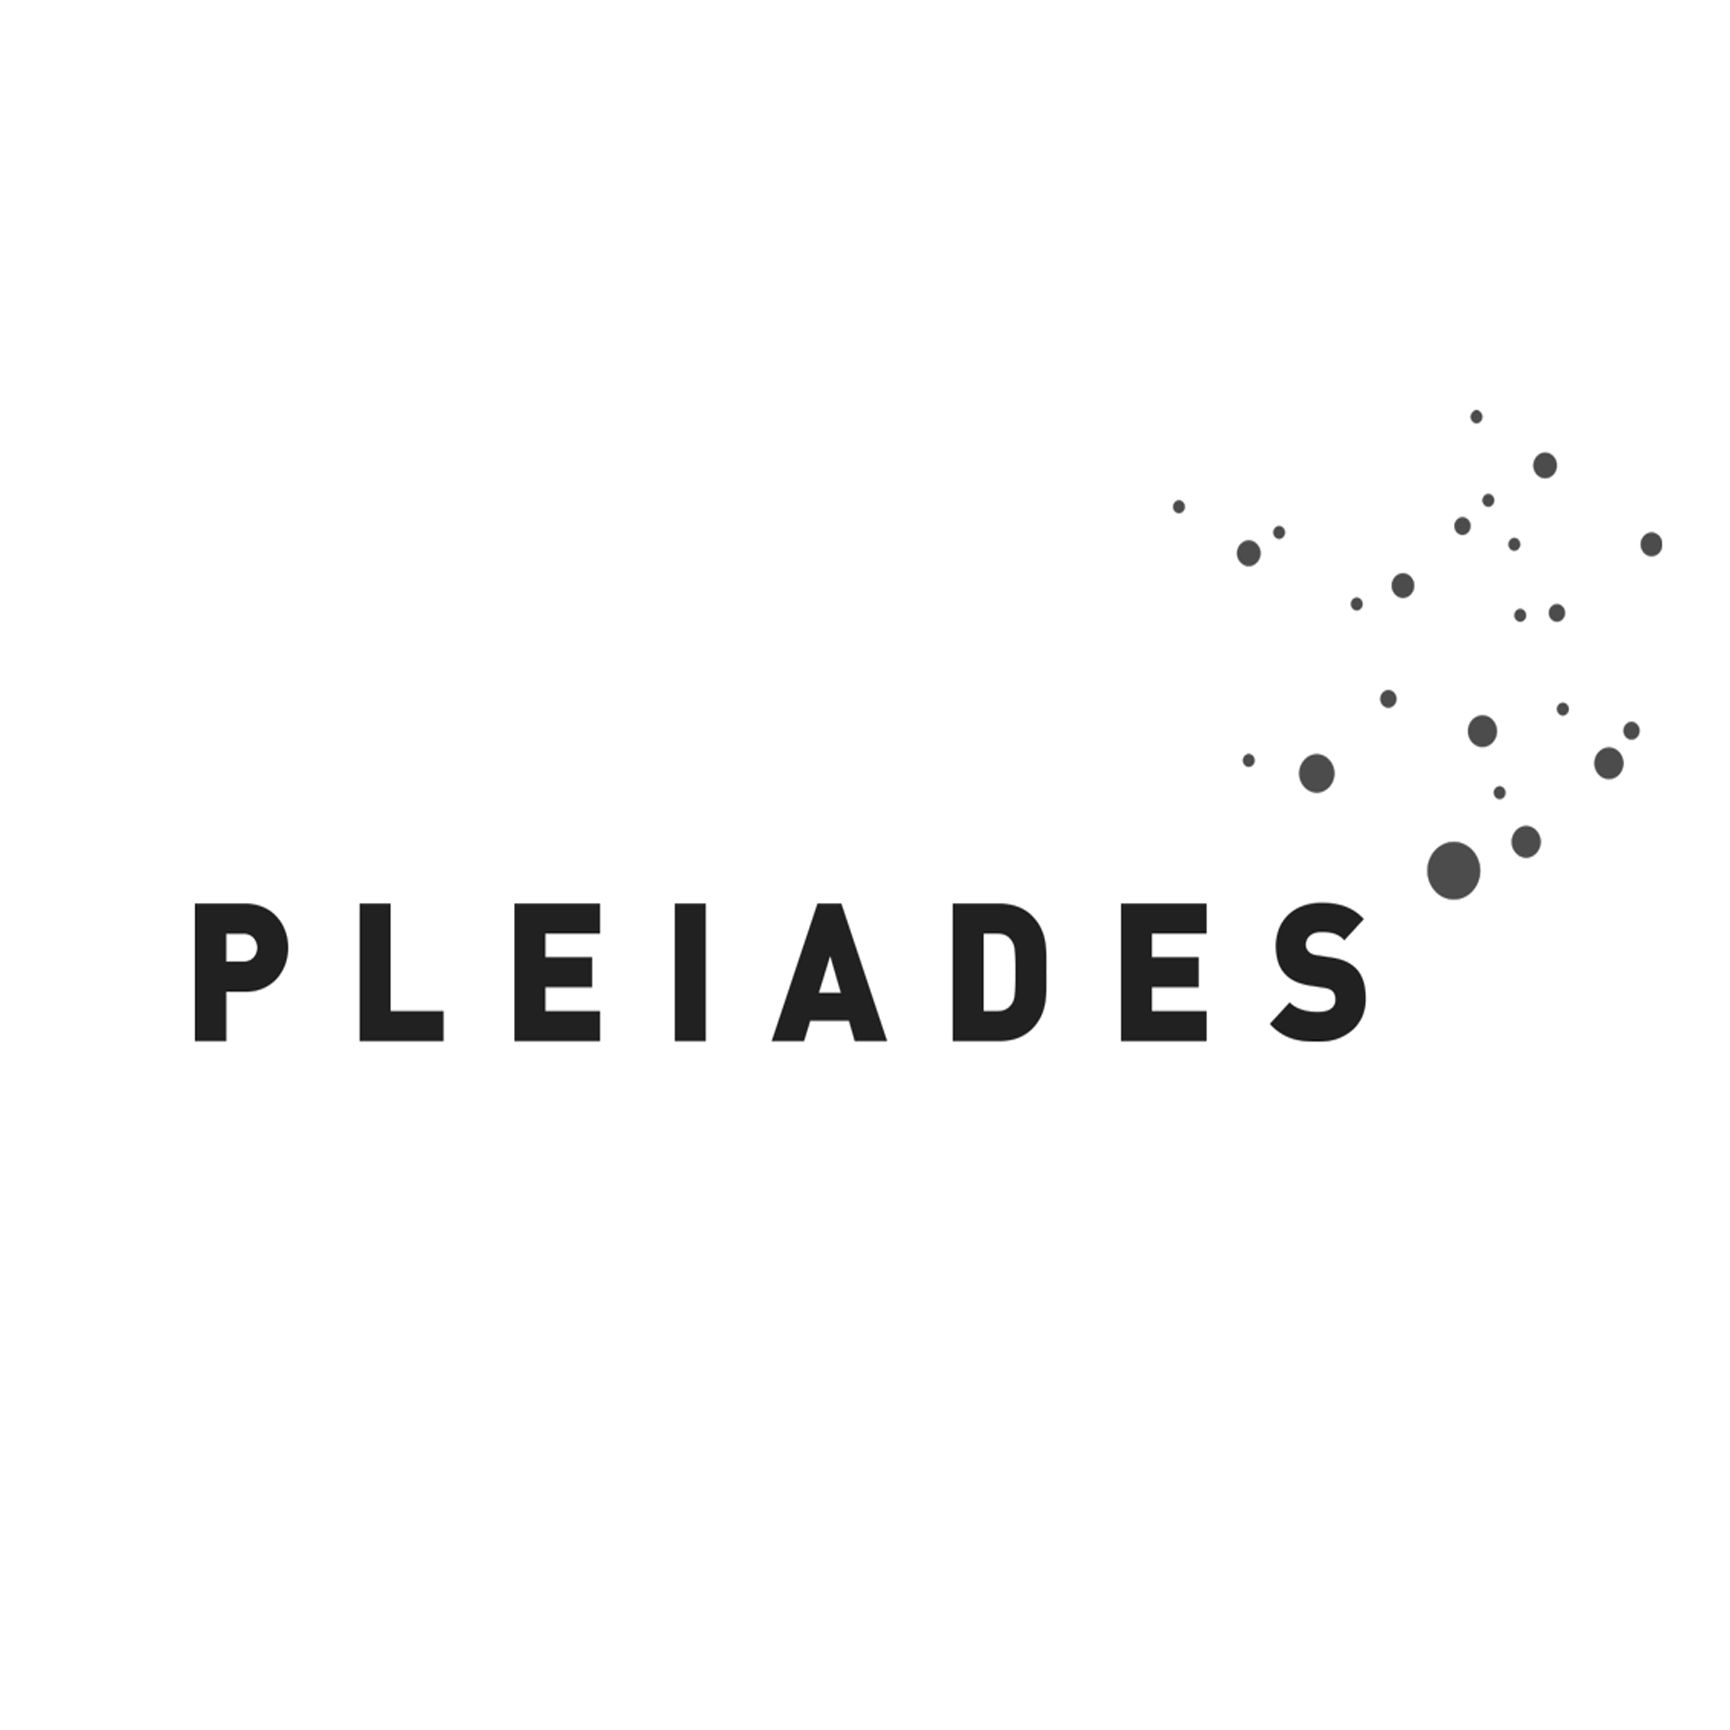 PleiadesLogo_trans_NoTag_960_bwx.png